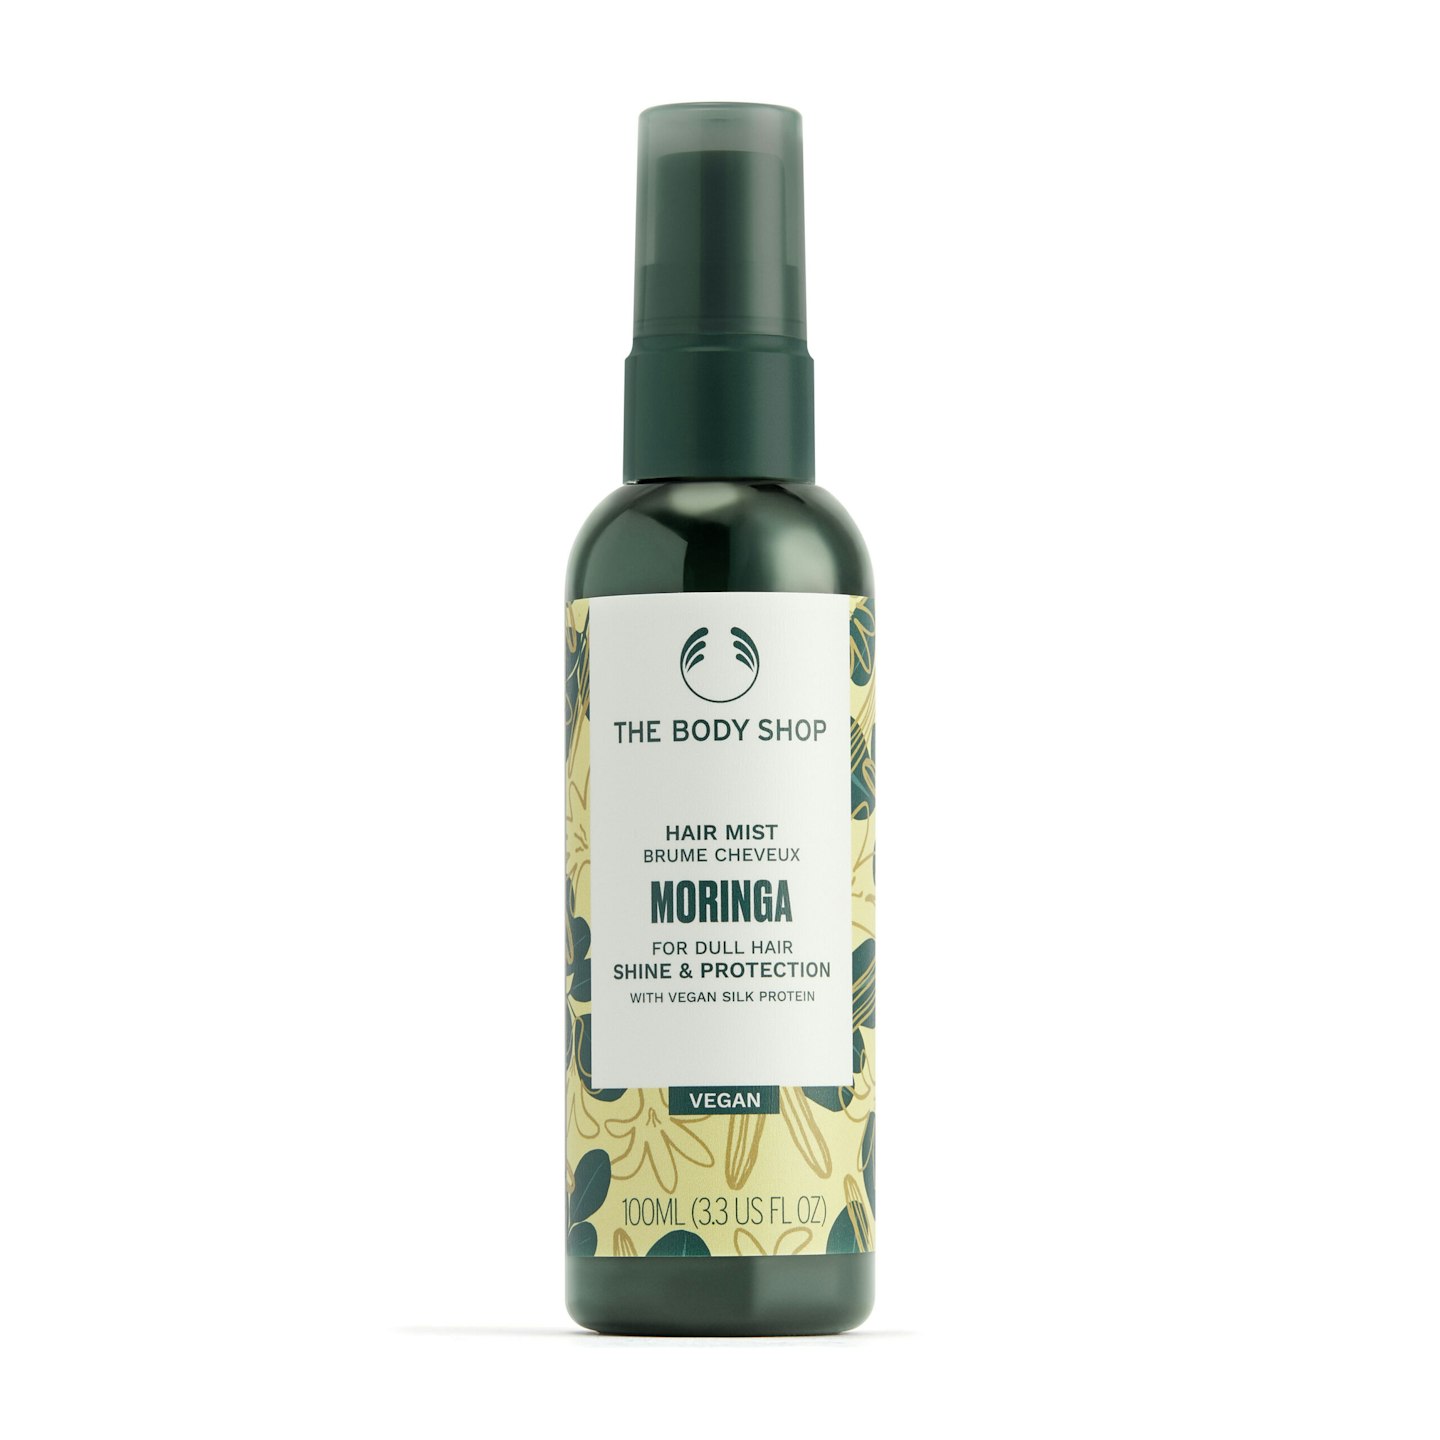 The Body Shop Moringa Shine & Protection Hair Mist